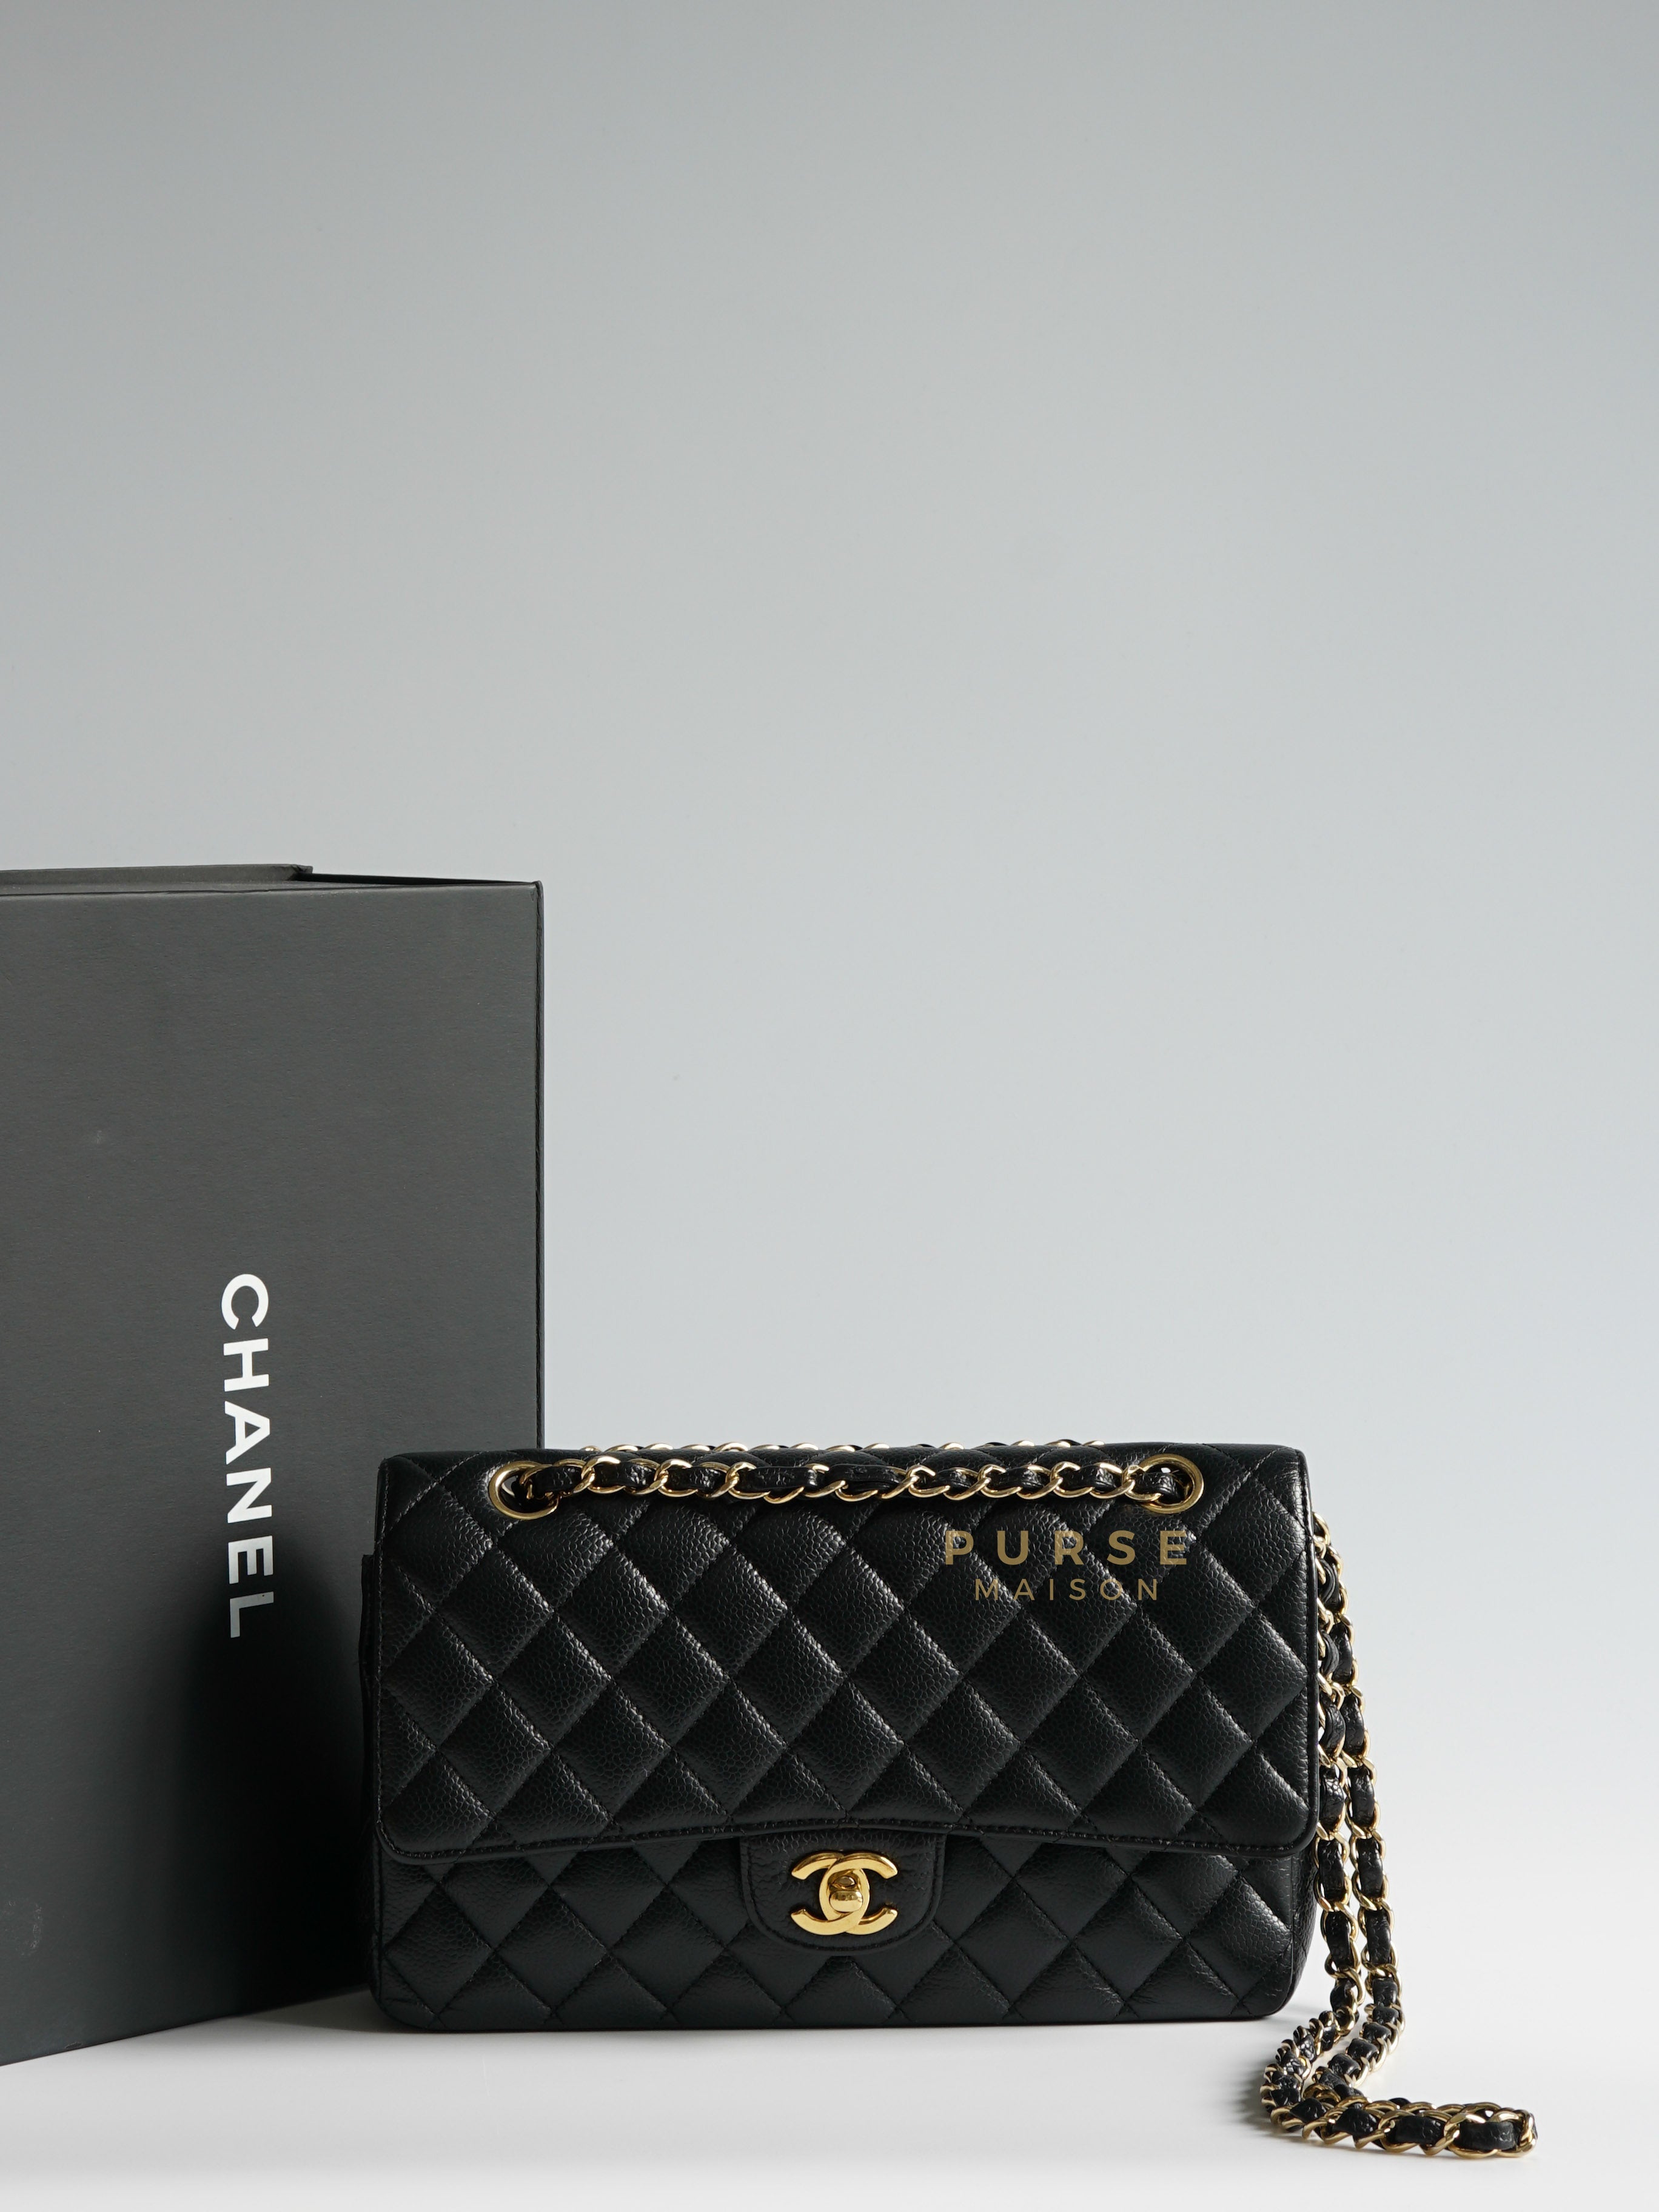 Classic Double Flap Medium in Black Caviar & Gold Hardware Series 19 | Purse Maison Luxury Bags Shop